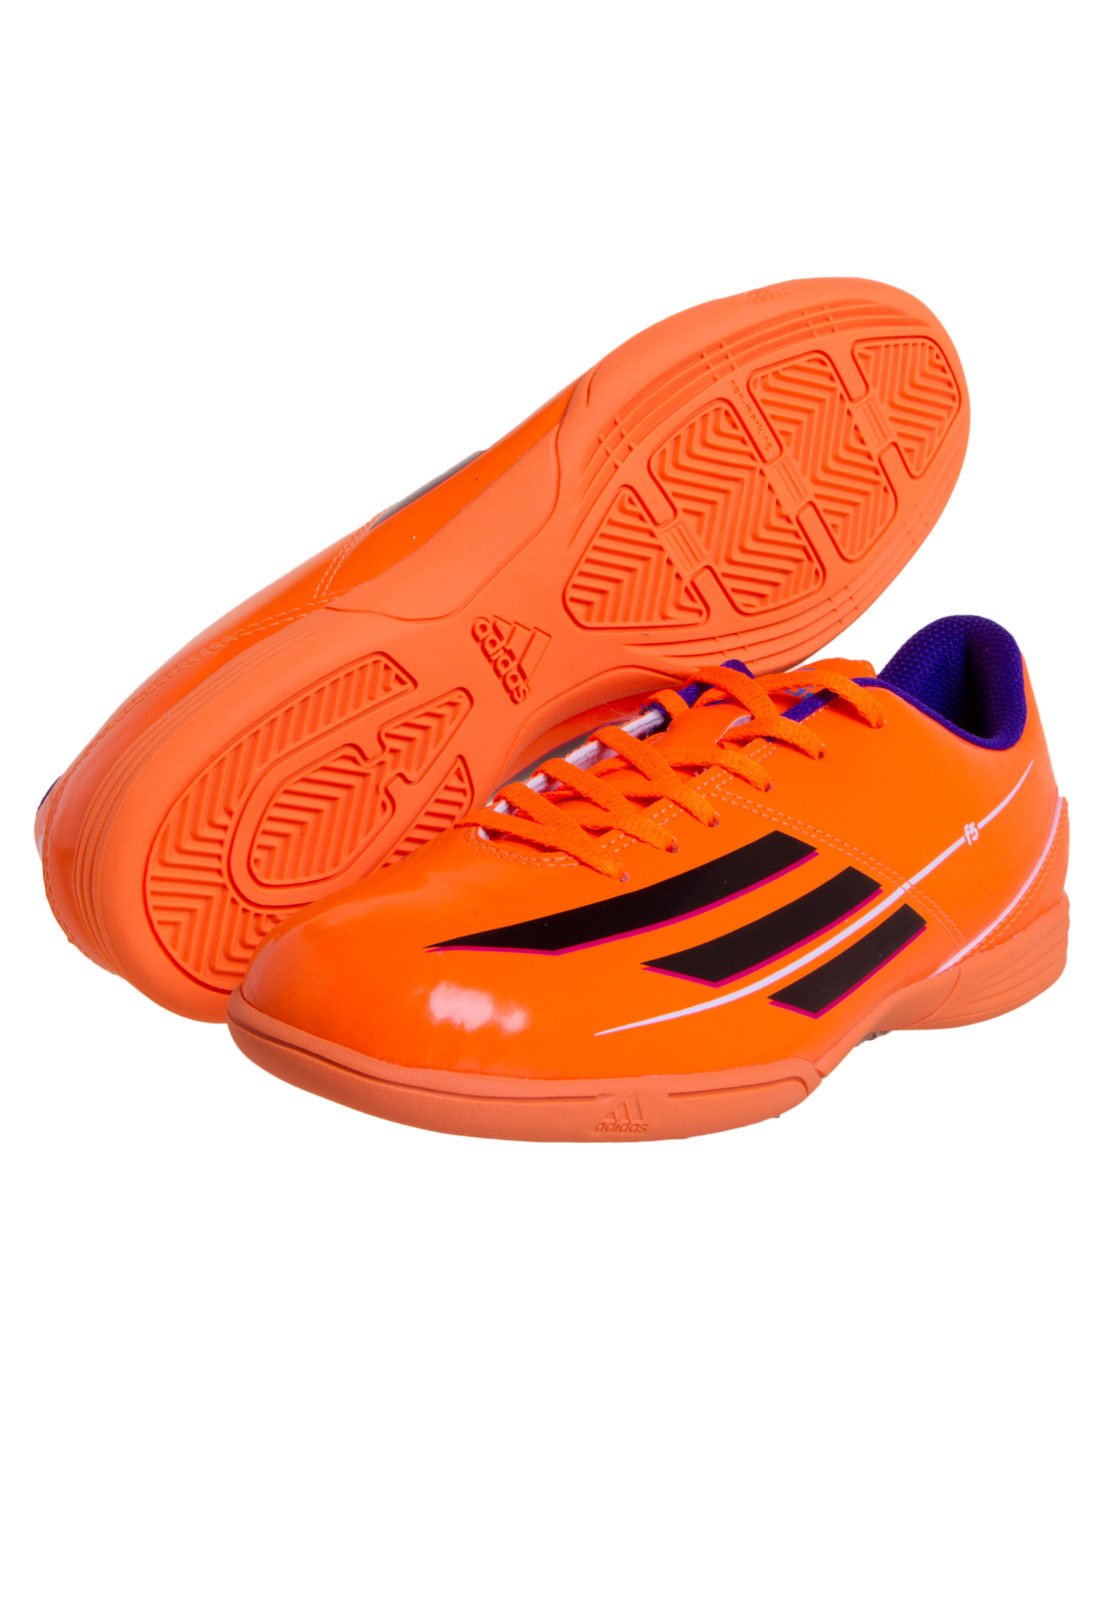 tenis futsal laranja